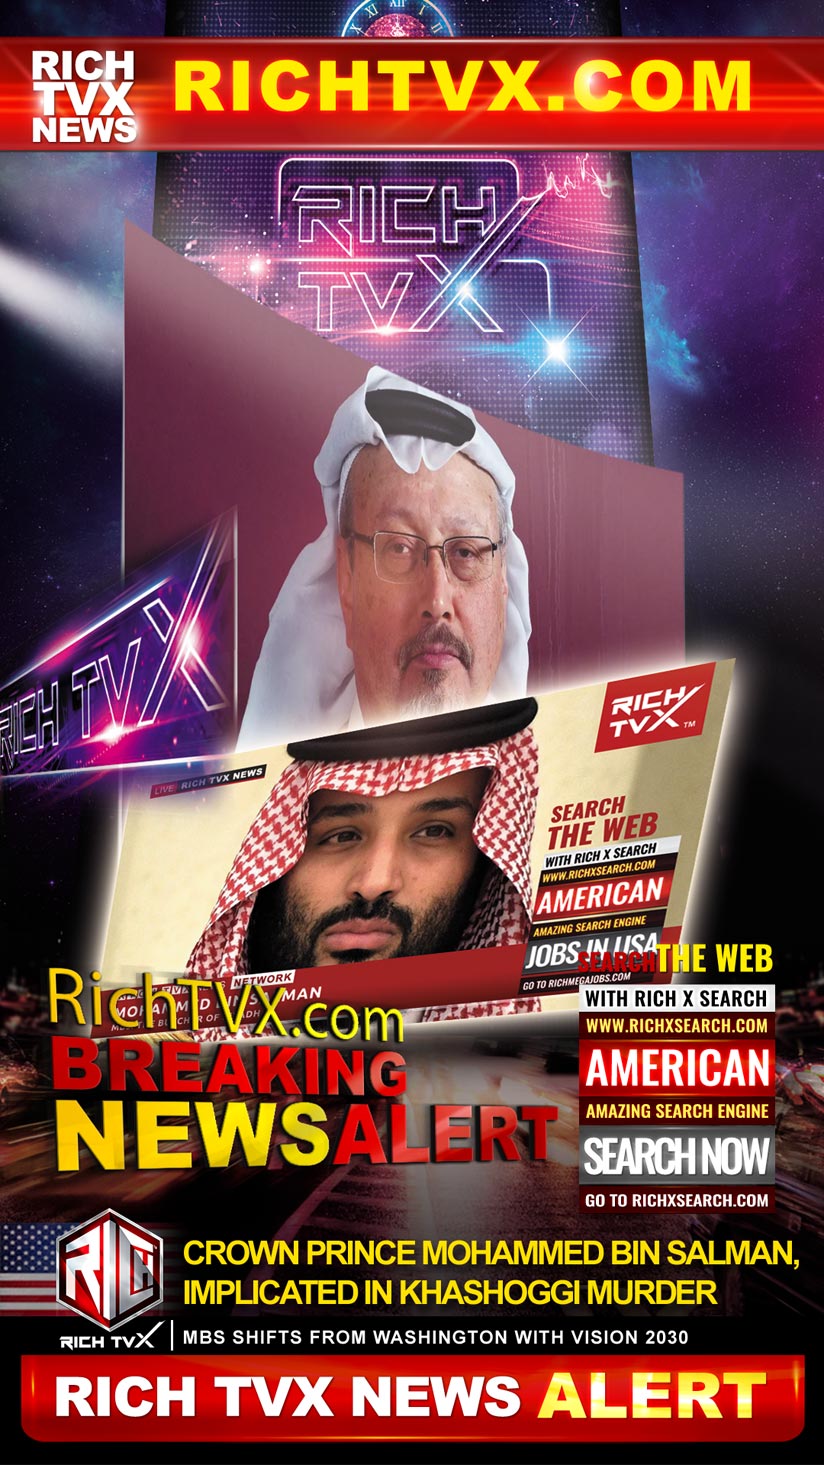 Mohammed Bin Salman, the Butcher of Riyadh, Implicated in Khashoggi Murder, Shifting Away from Washington